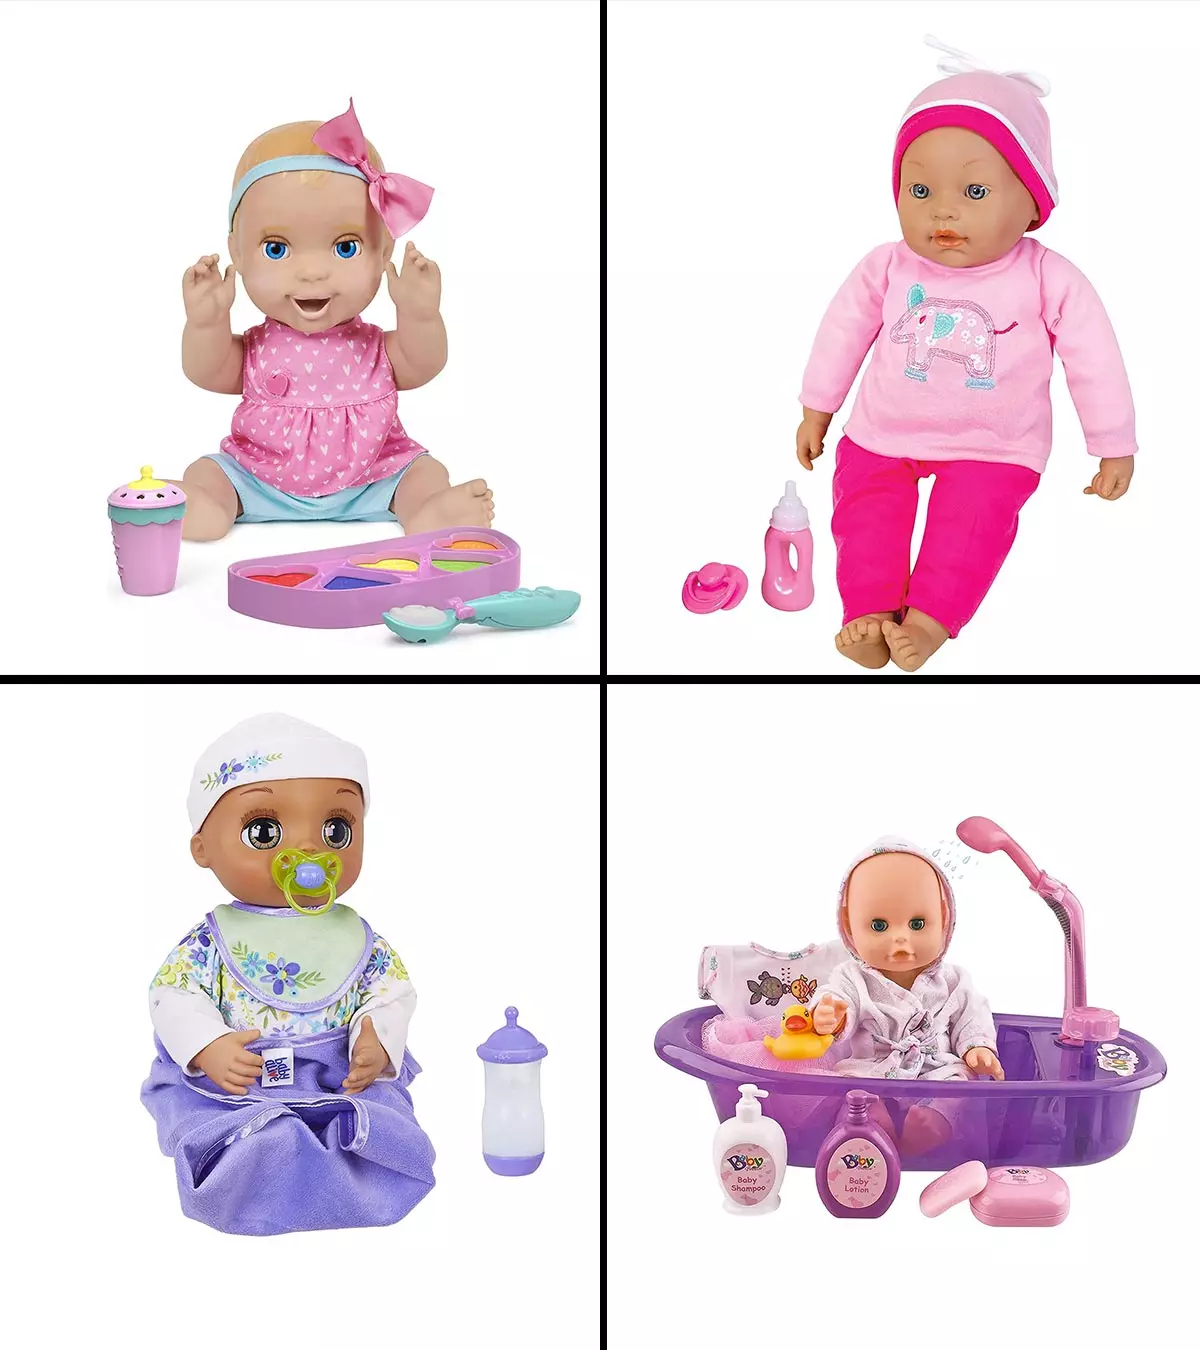 11 Best Interactive Baby Dolls in 2021